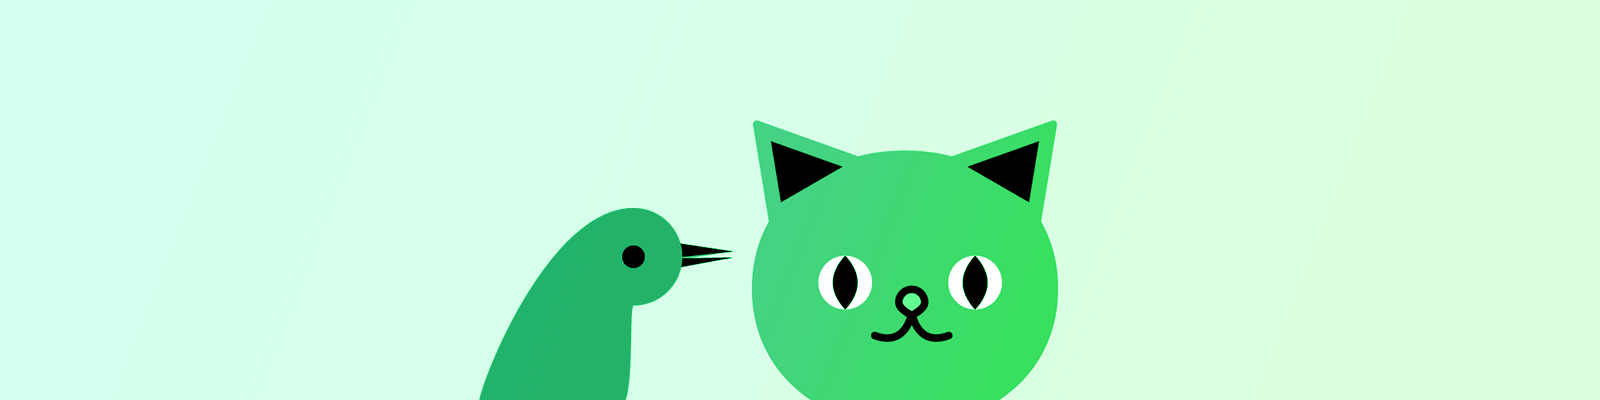 blinking cat green bird